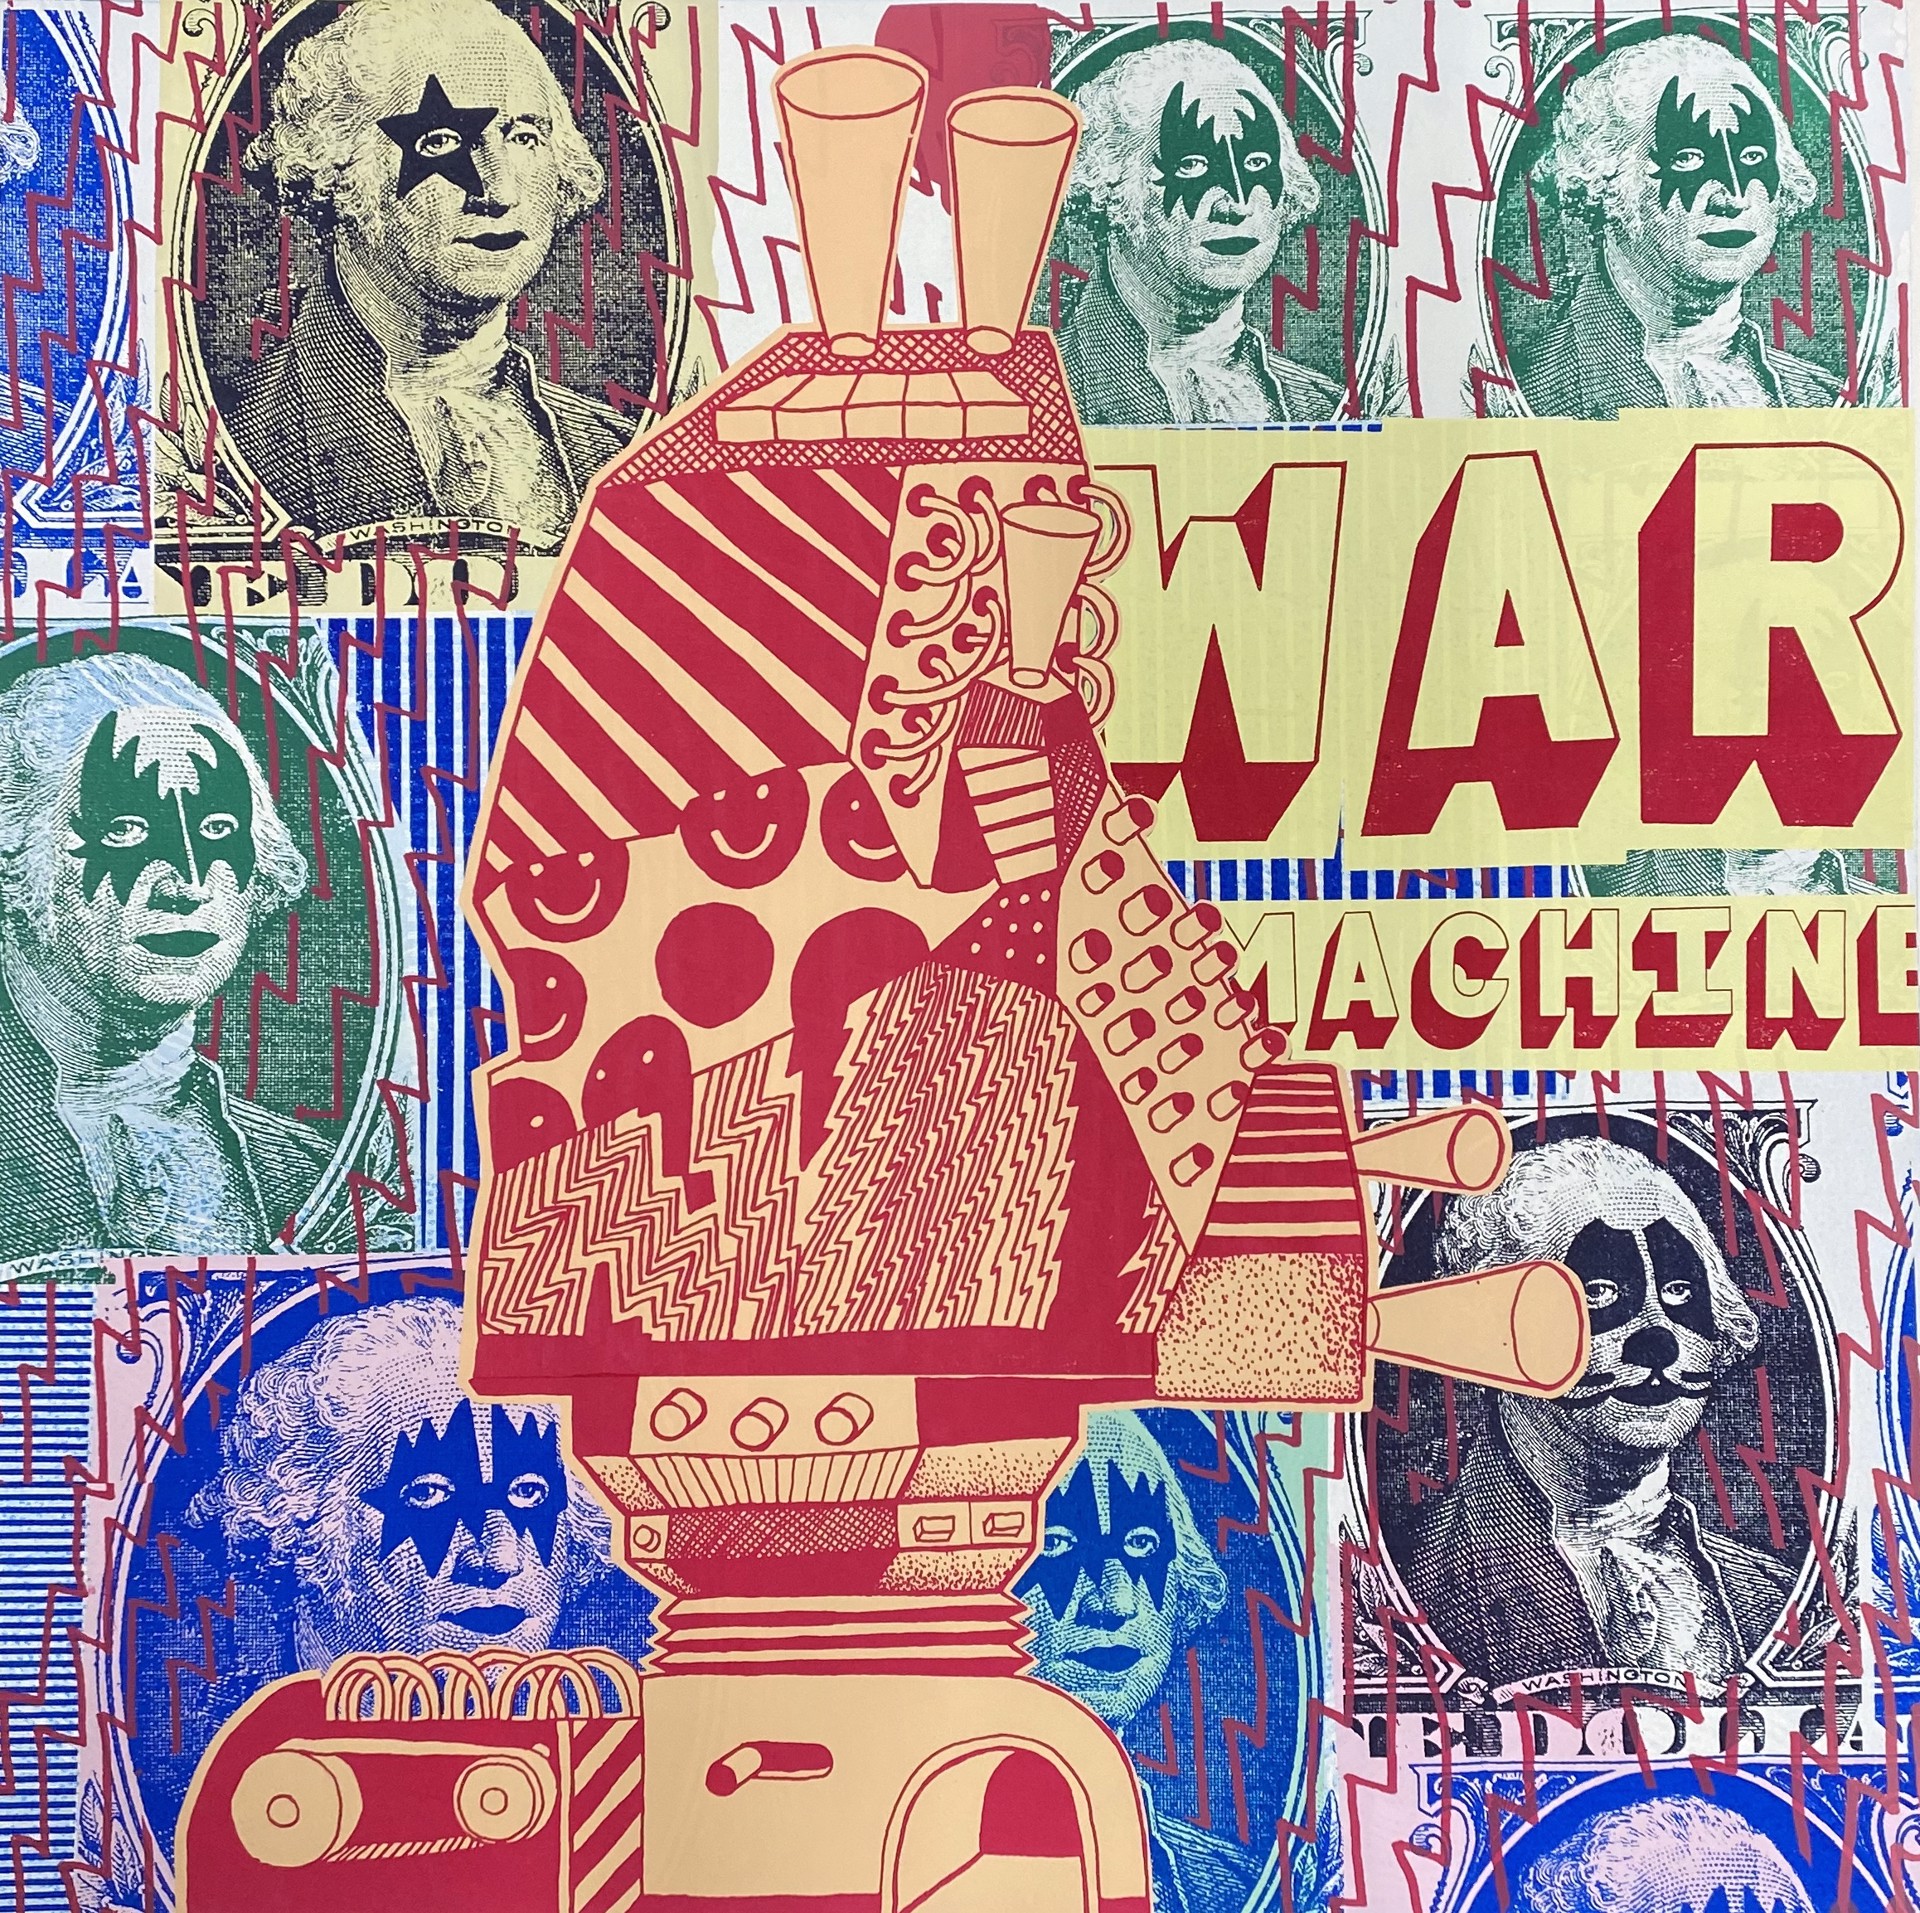 War Machine by Chadwick Tolley